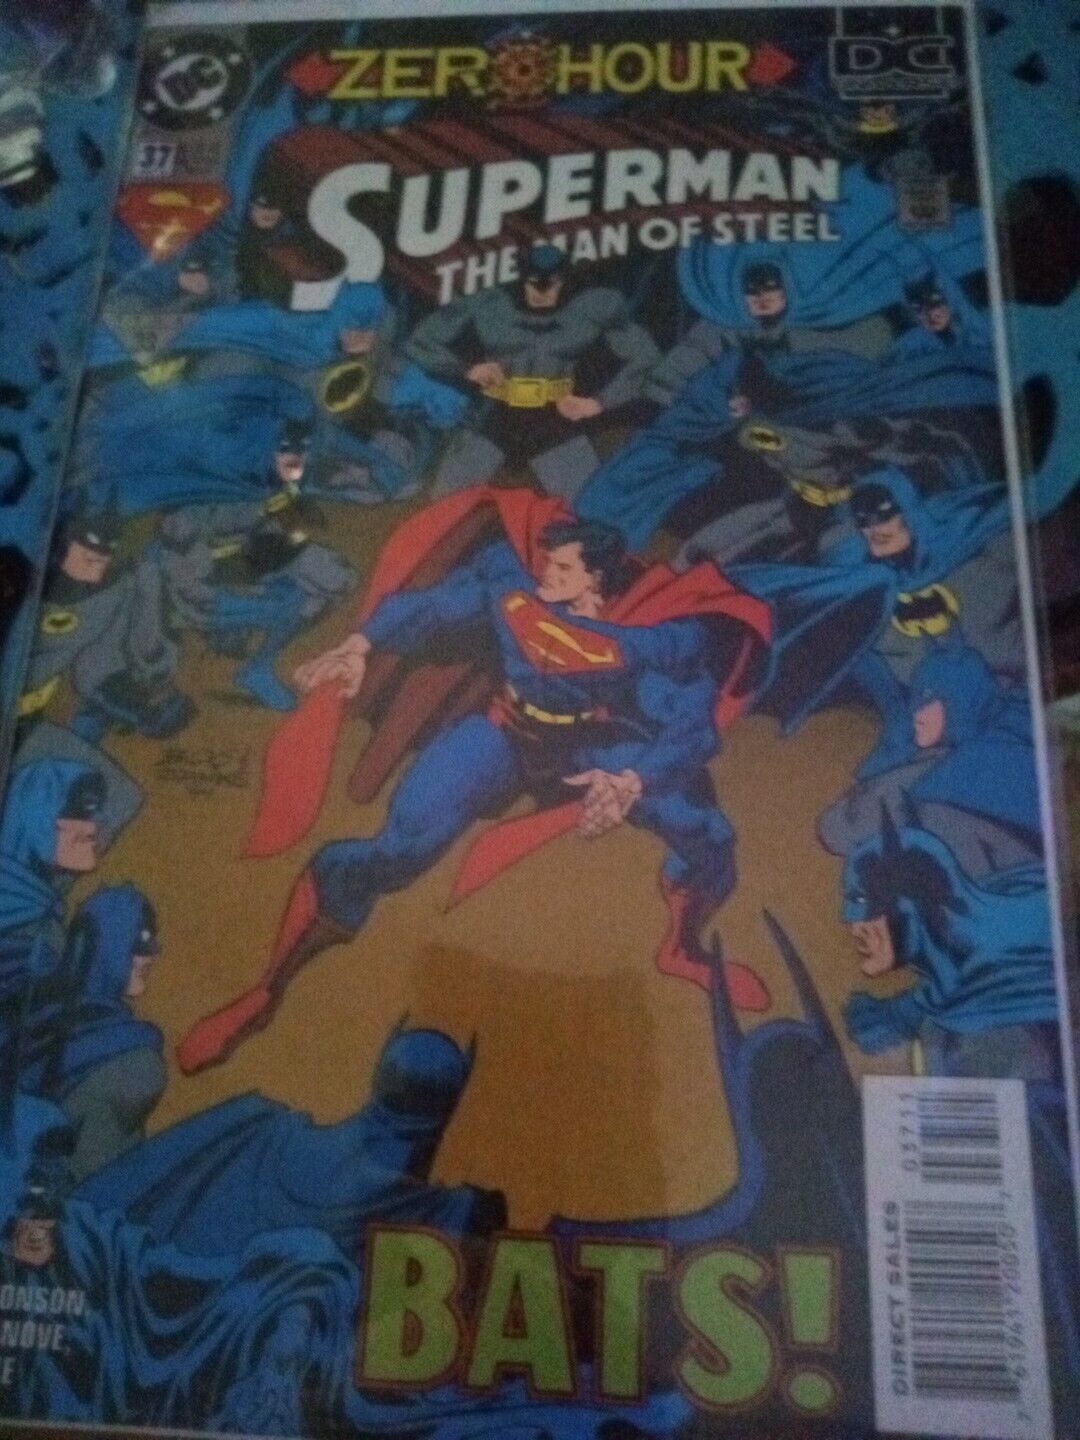 SUPERMAN 1994 ZERO HOUR 37 BATMAN COMIC BOOK wonder woman green lantern aquaman 